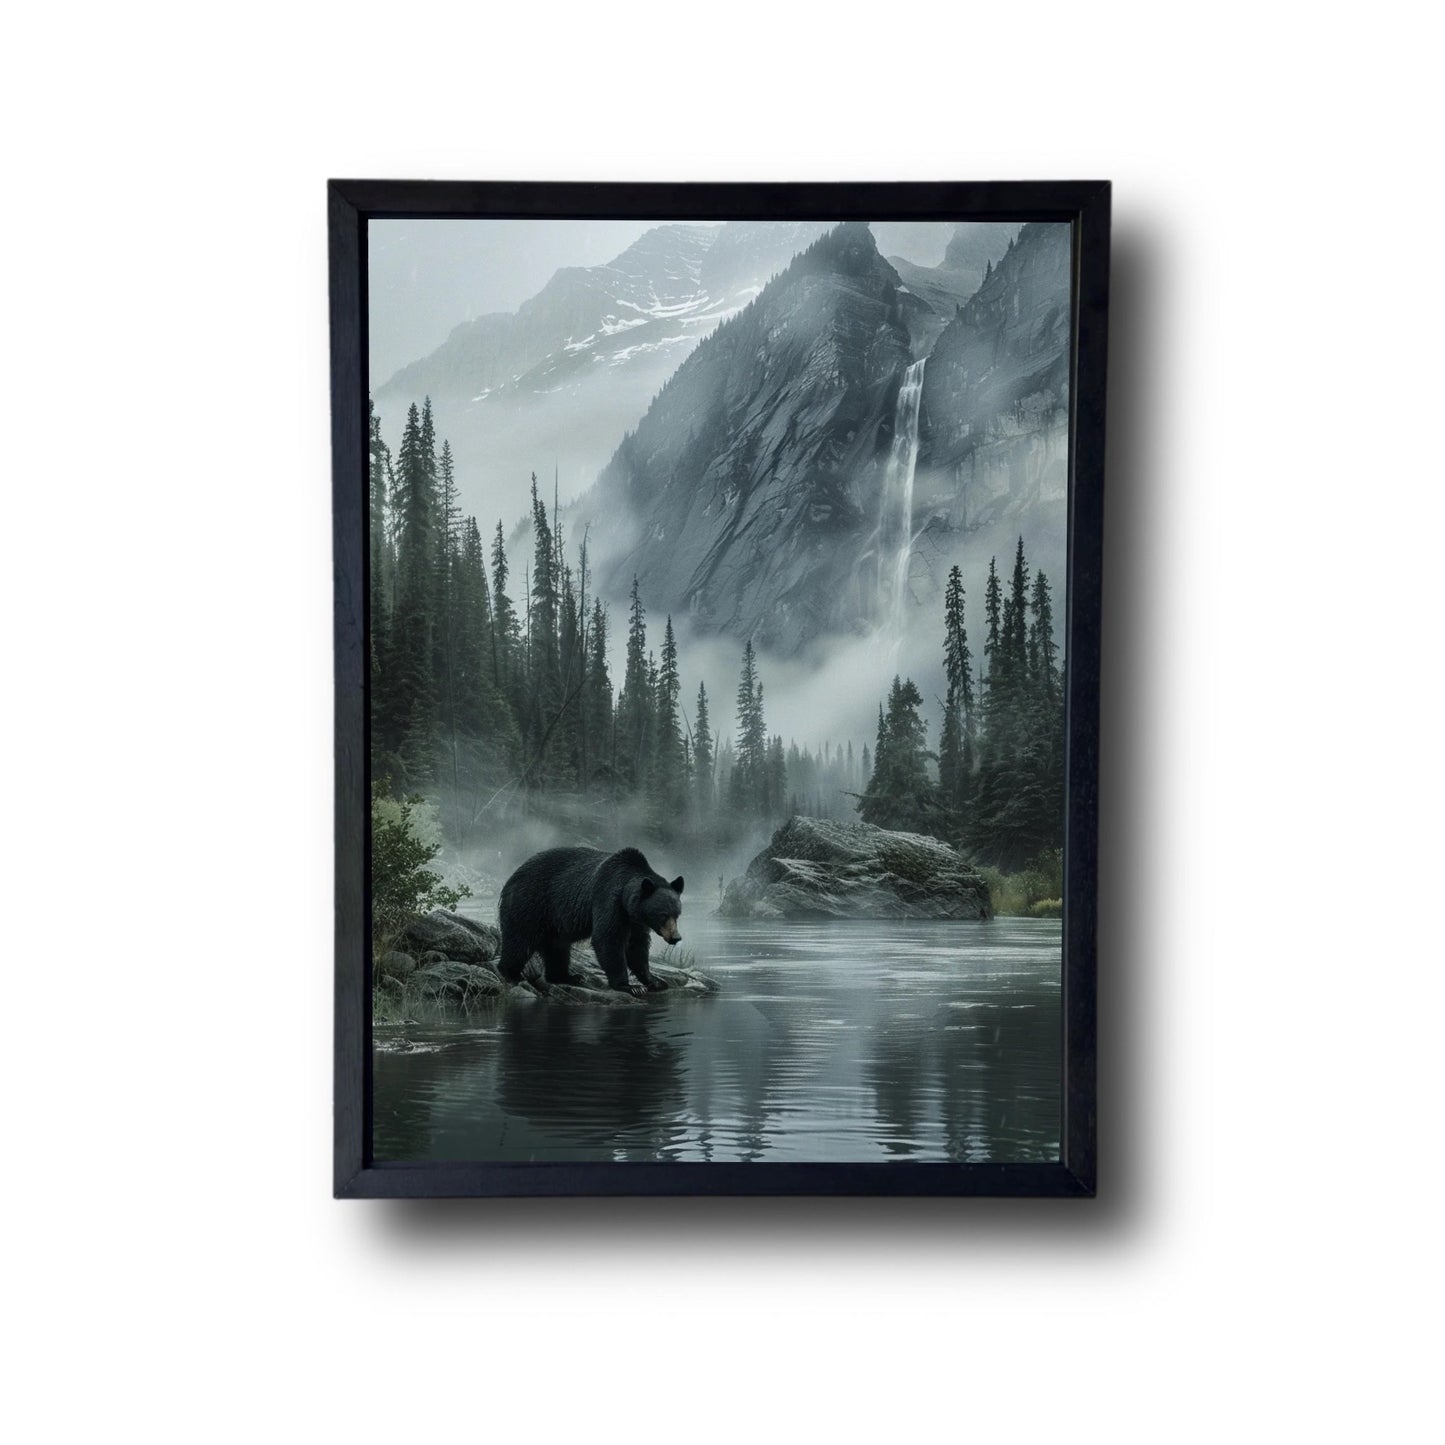 Black Bear Fishing Canadian River 4.0